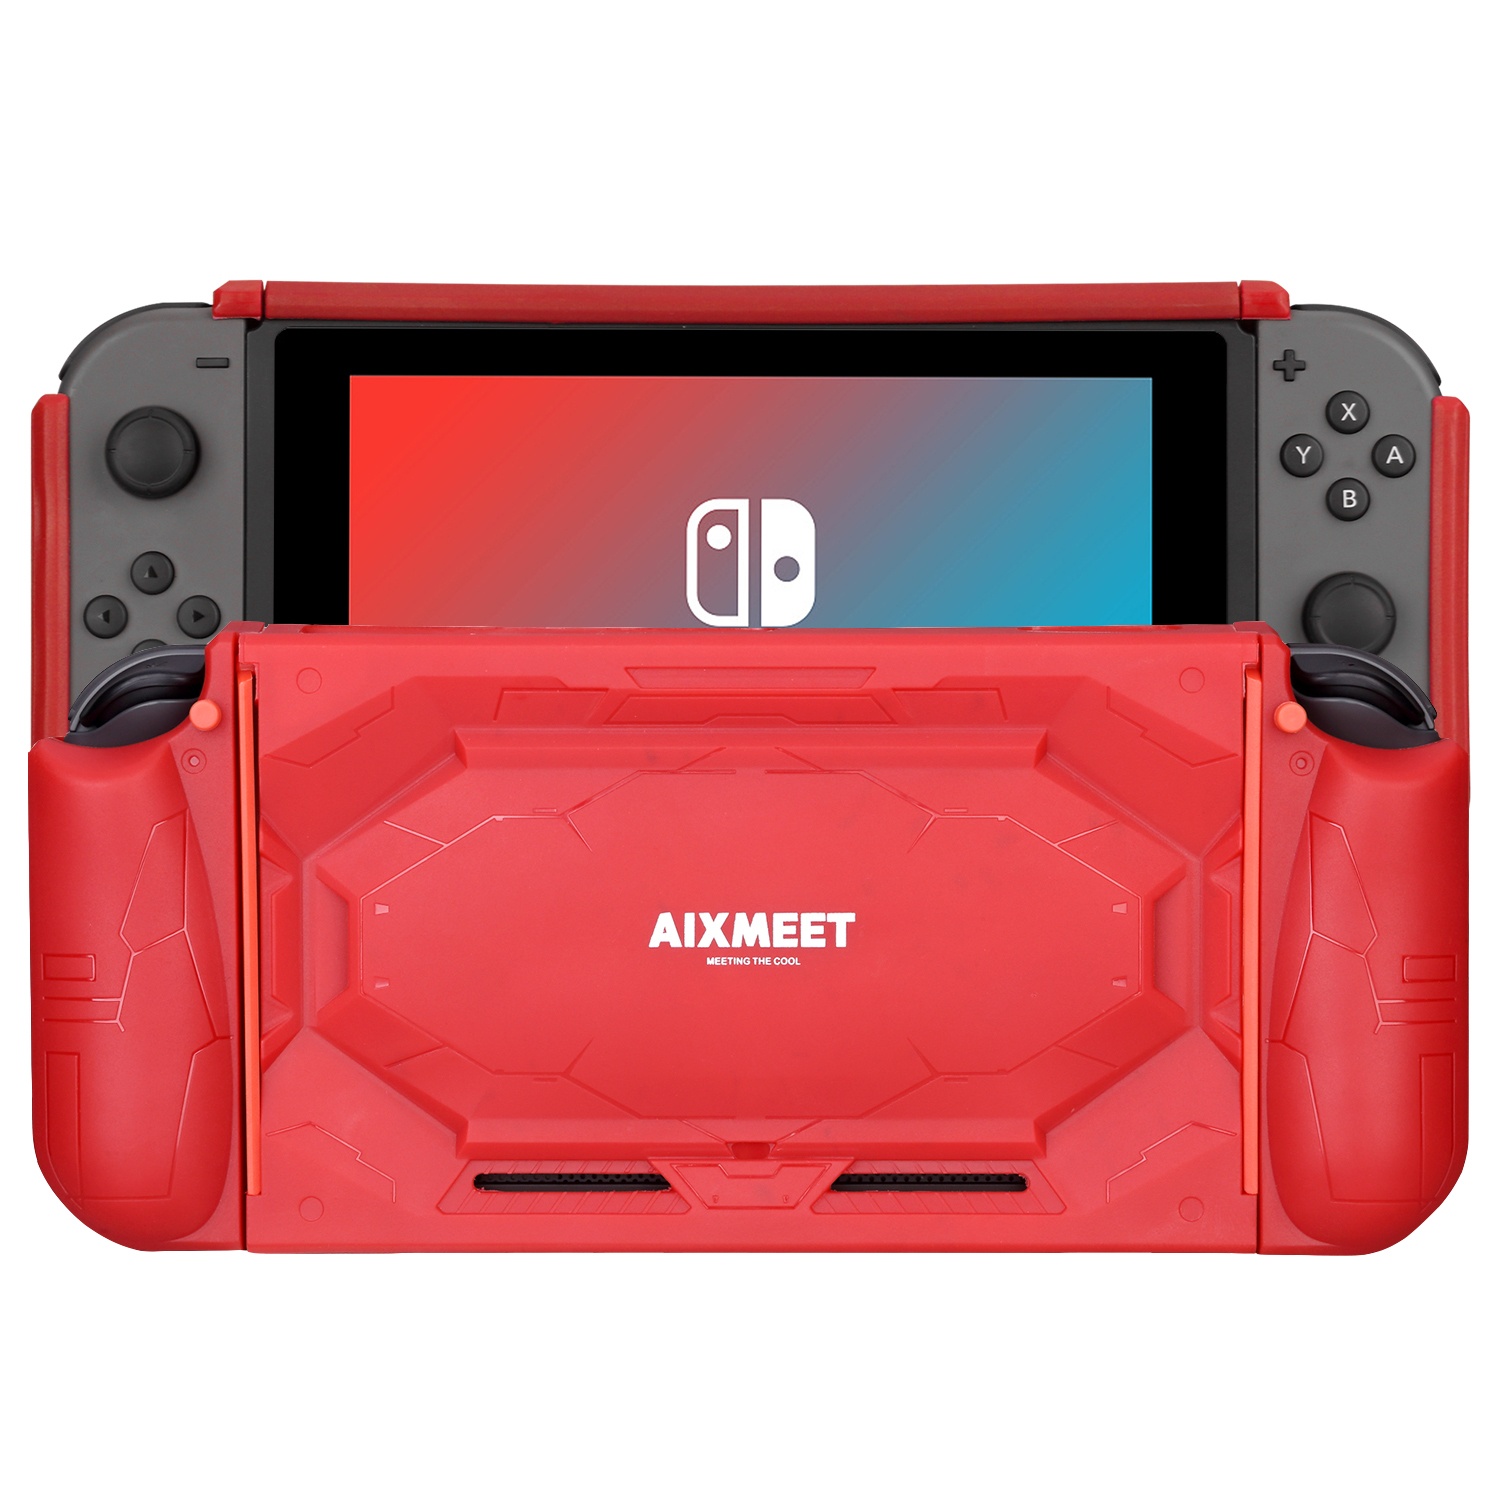 Aixmeet: Ultimate Nintendo Switch Detachable Case | Indiegogo